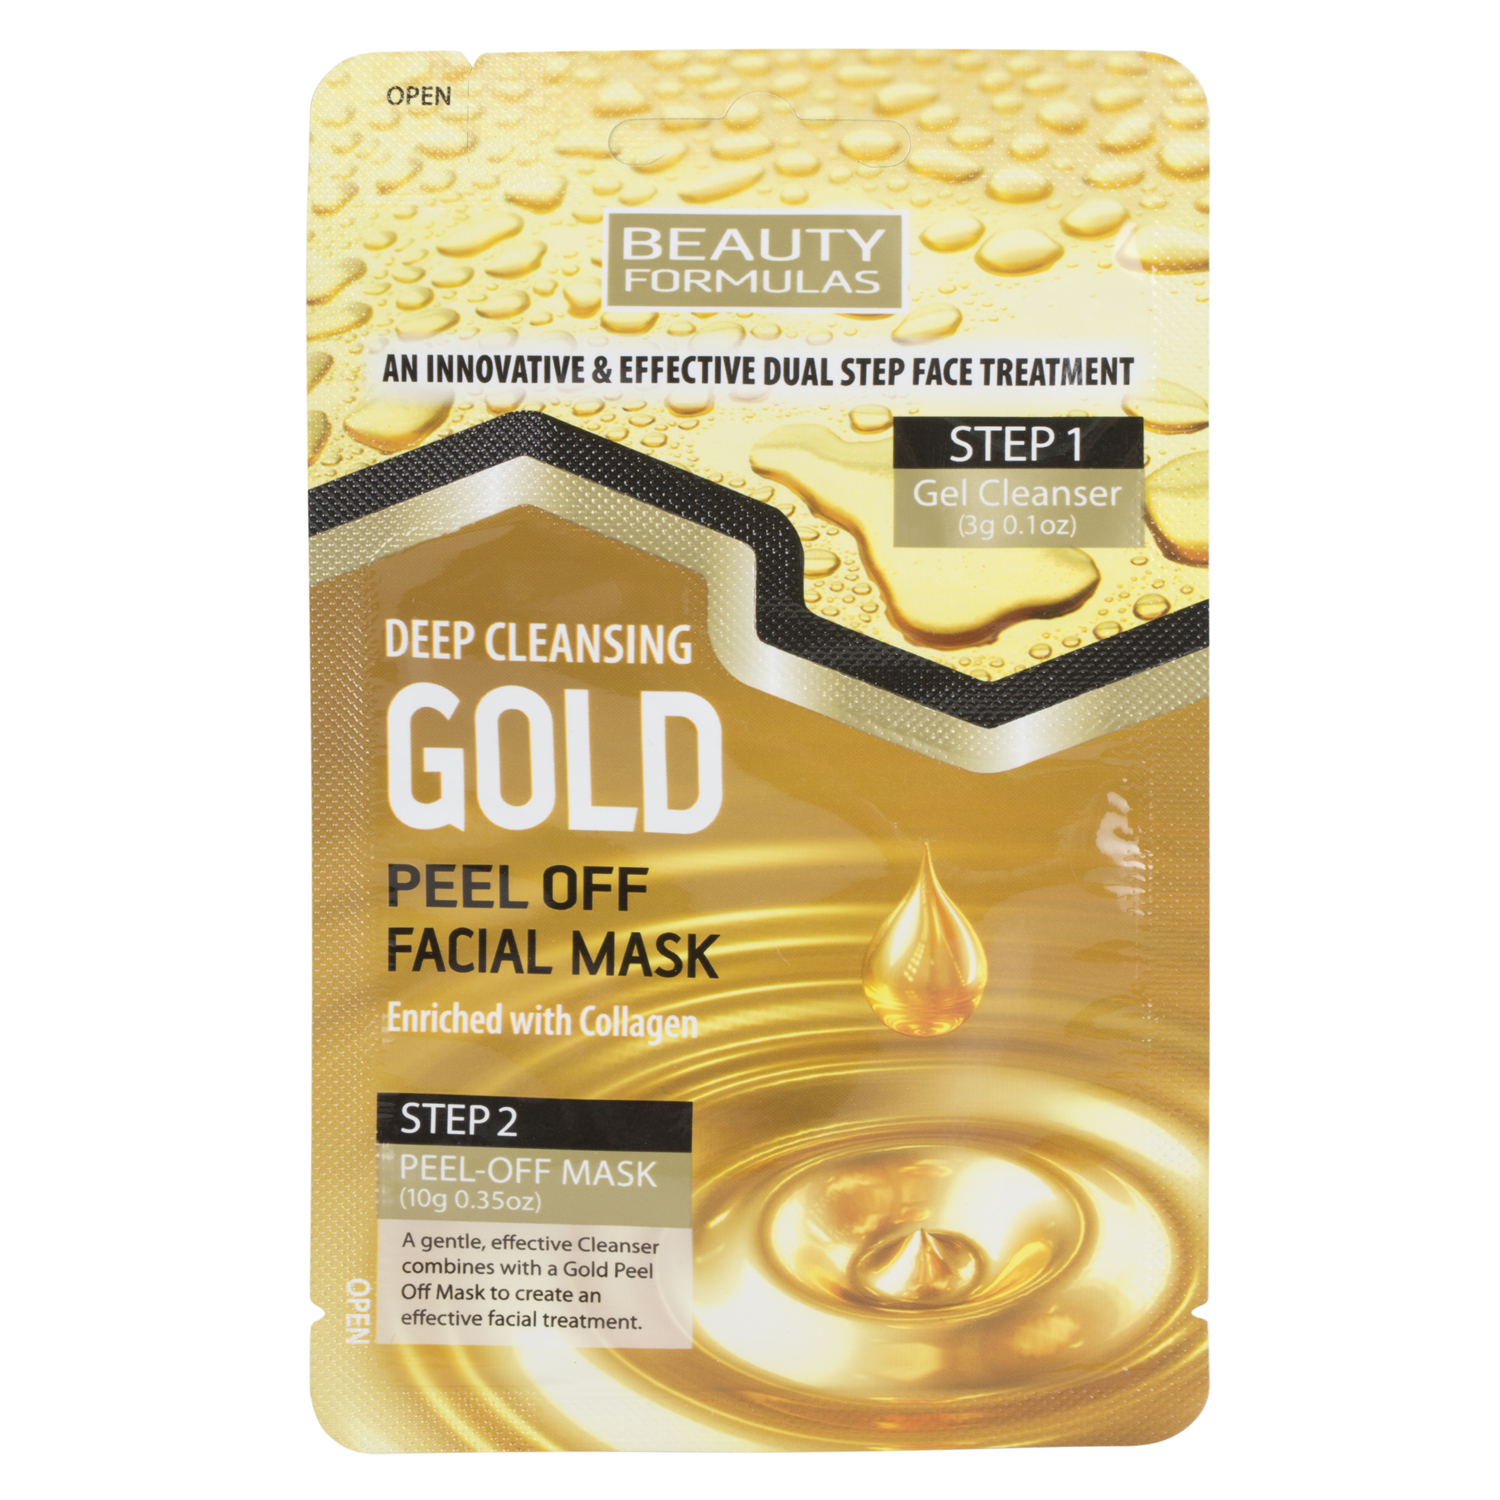 Beauty Formulas Deep Cleansing Gold Facial Mask Image